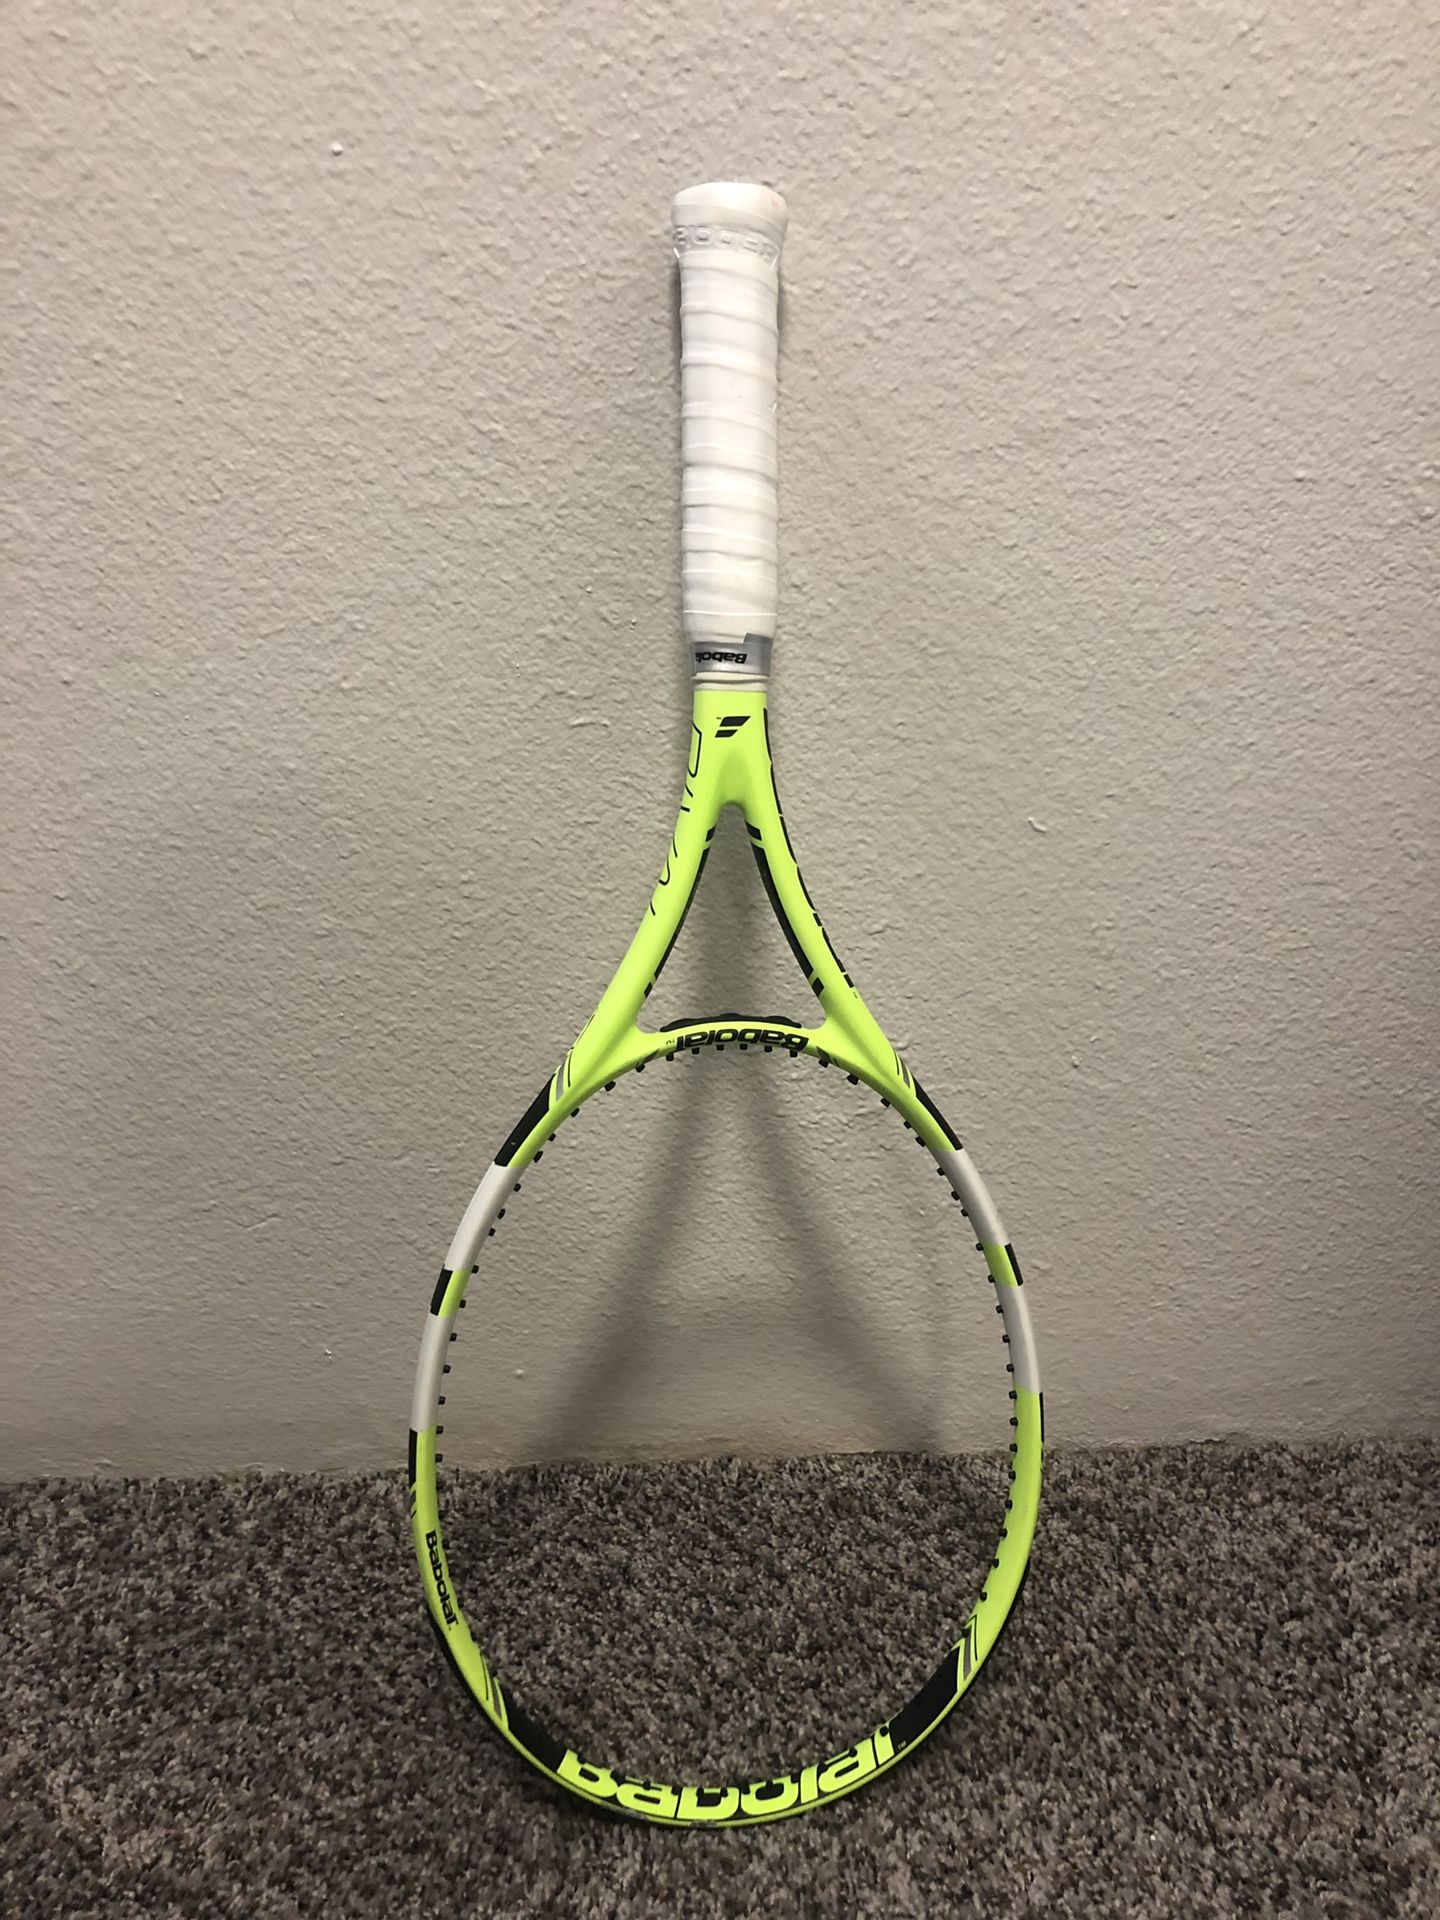 Babolat Rival tennis racket